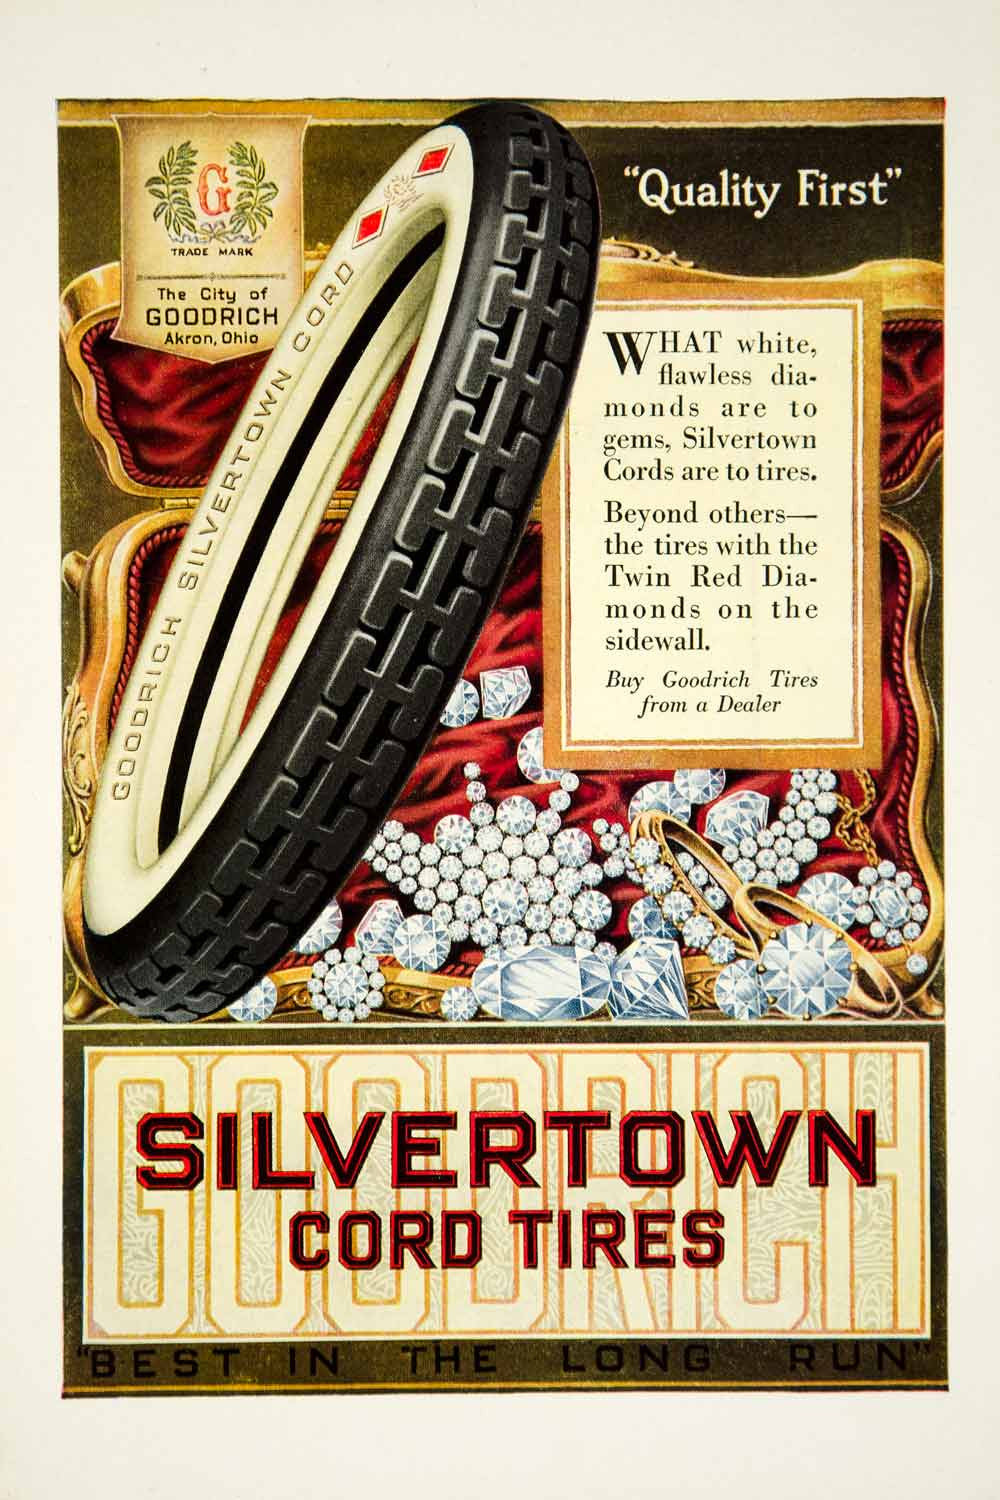 1919 Ad Goodrich Silvertown Cord Tires Automobile Car Diamond Jewelry Art YSC1 - Period Paper
